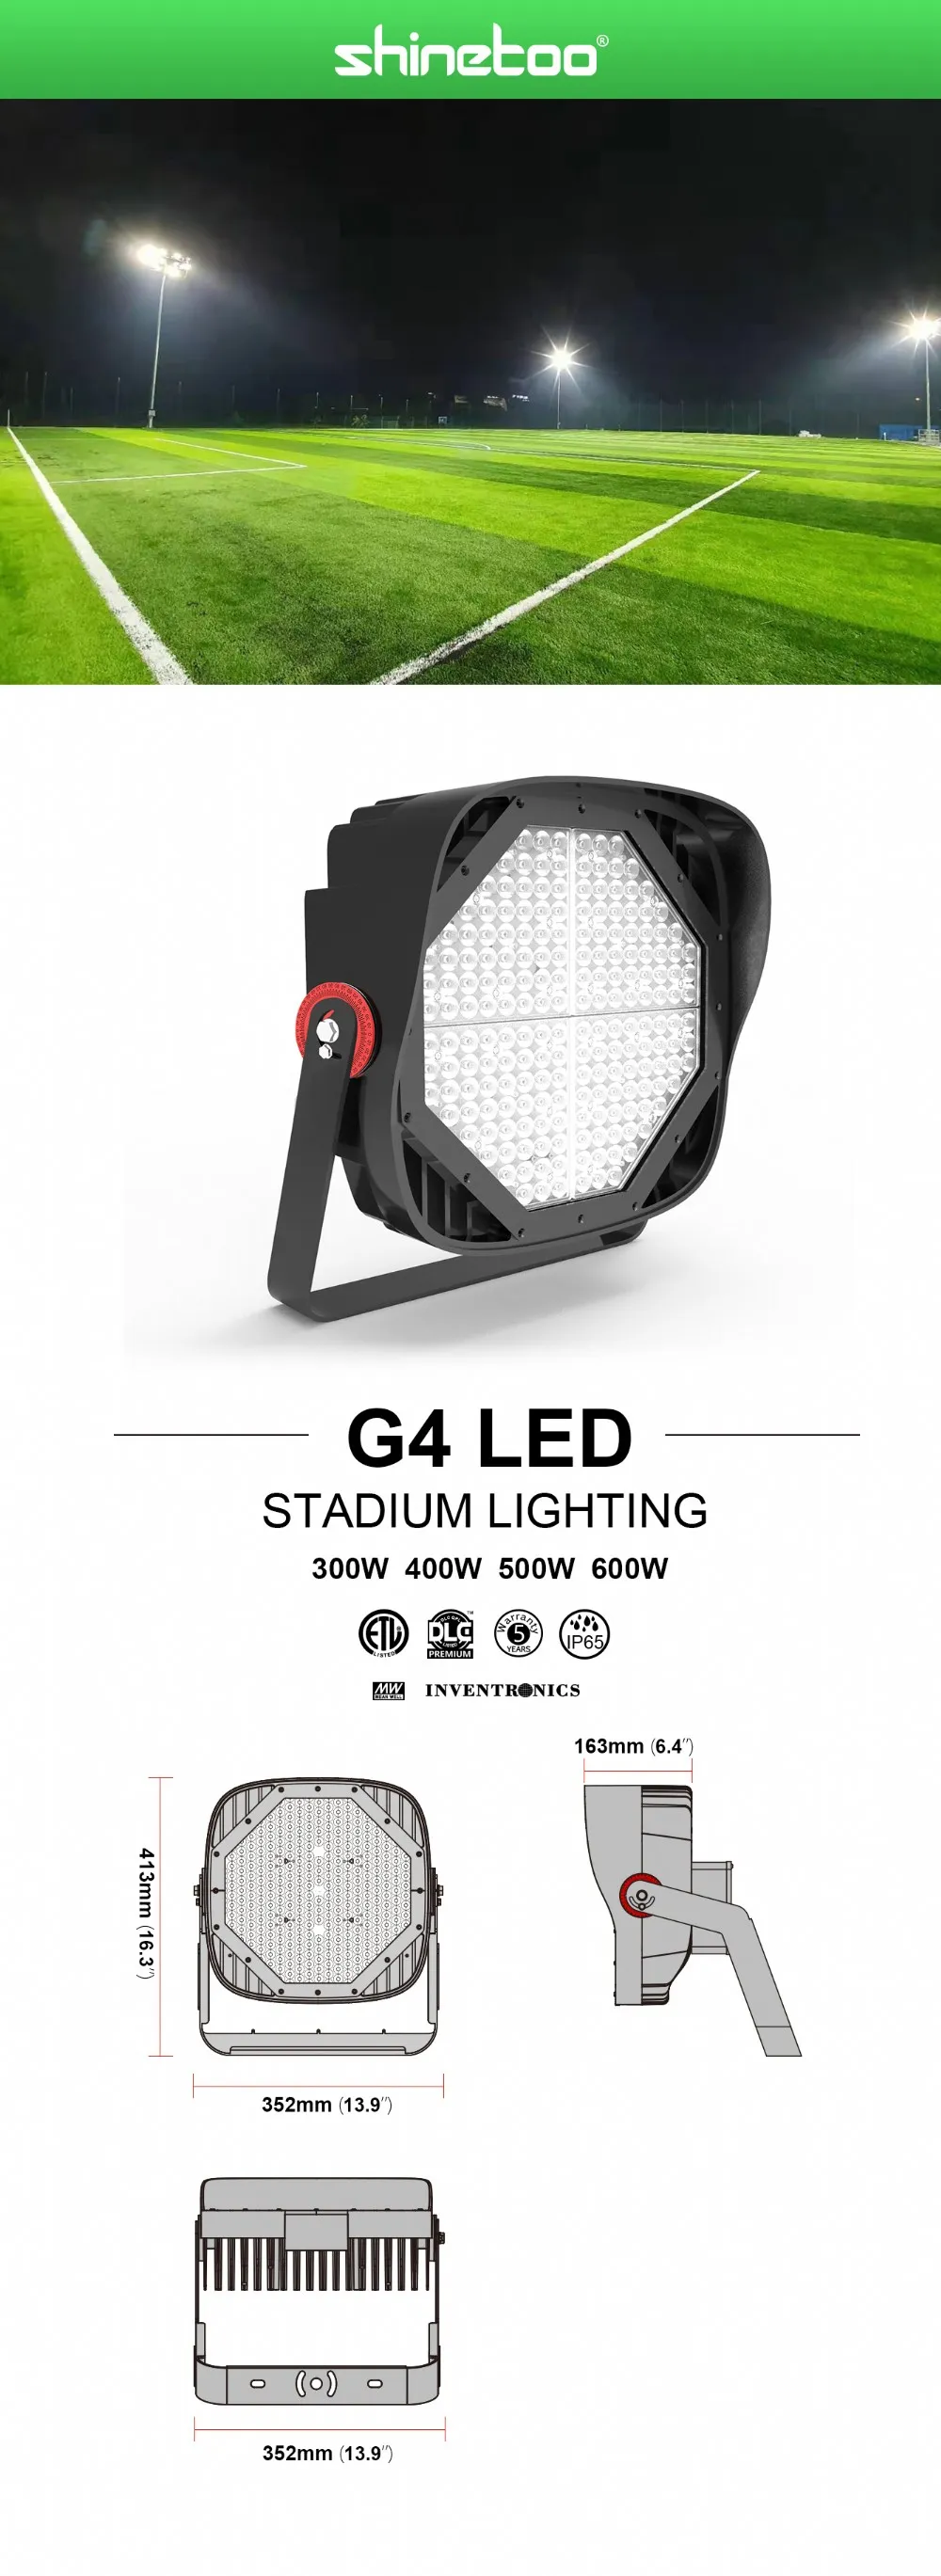 G4 Stadium Lighting